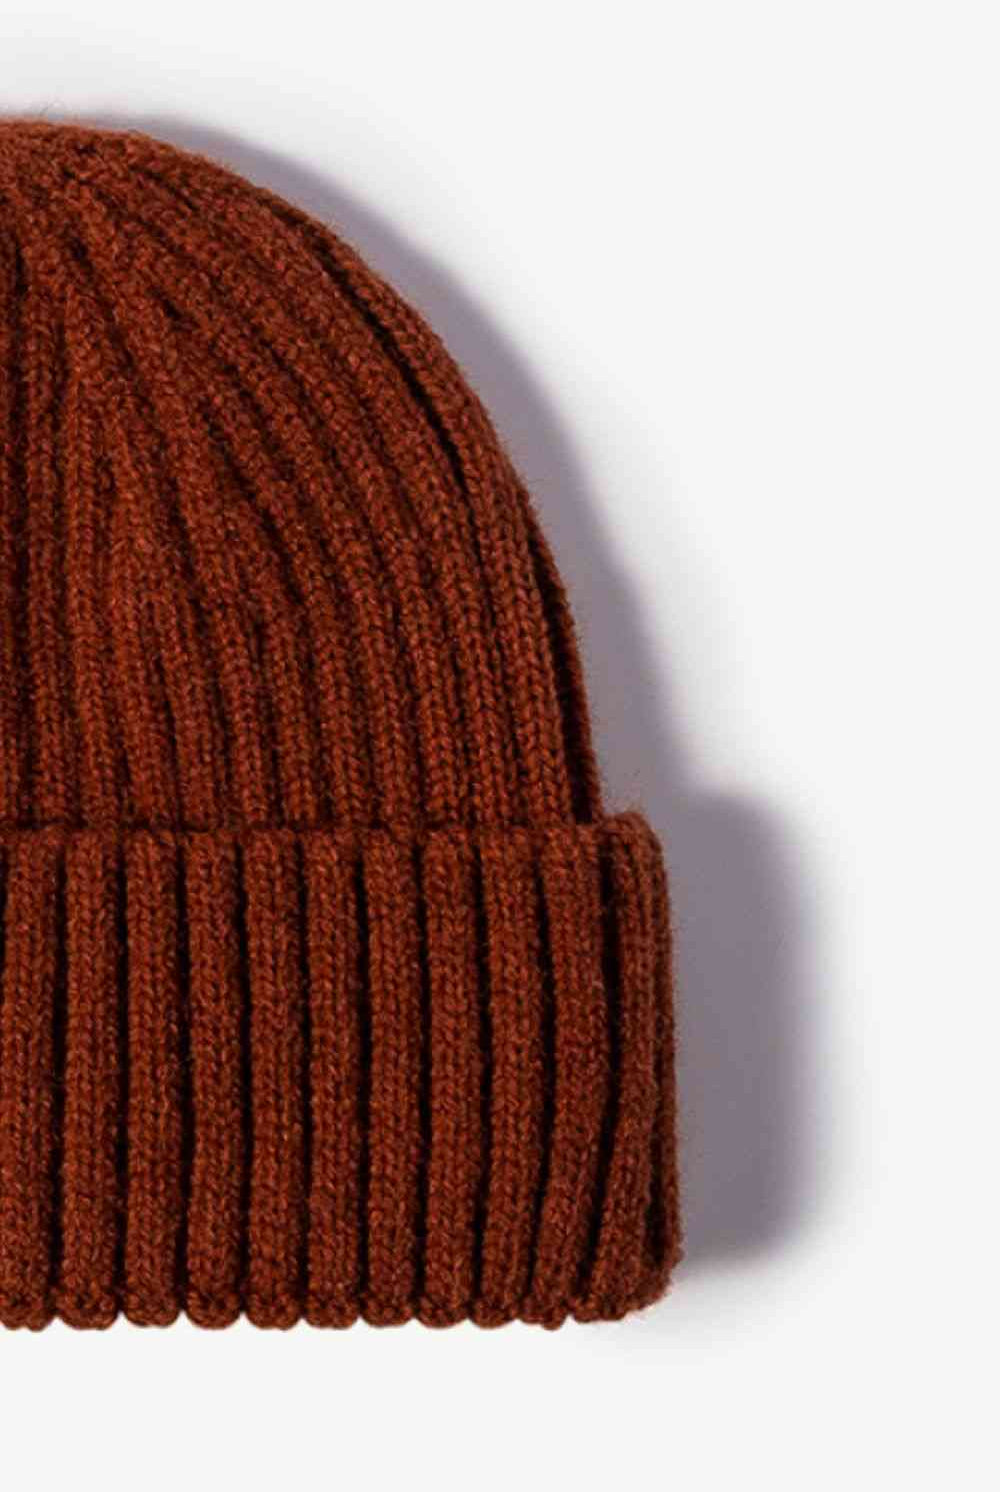 Saddle Brown Rib-Knit Cuff Beanie Winter Accessories